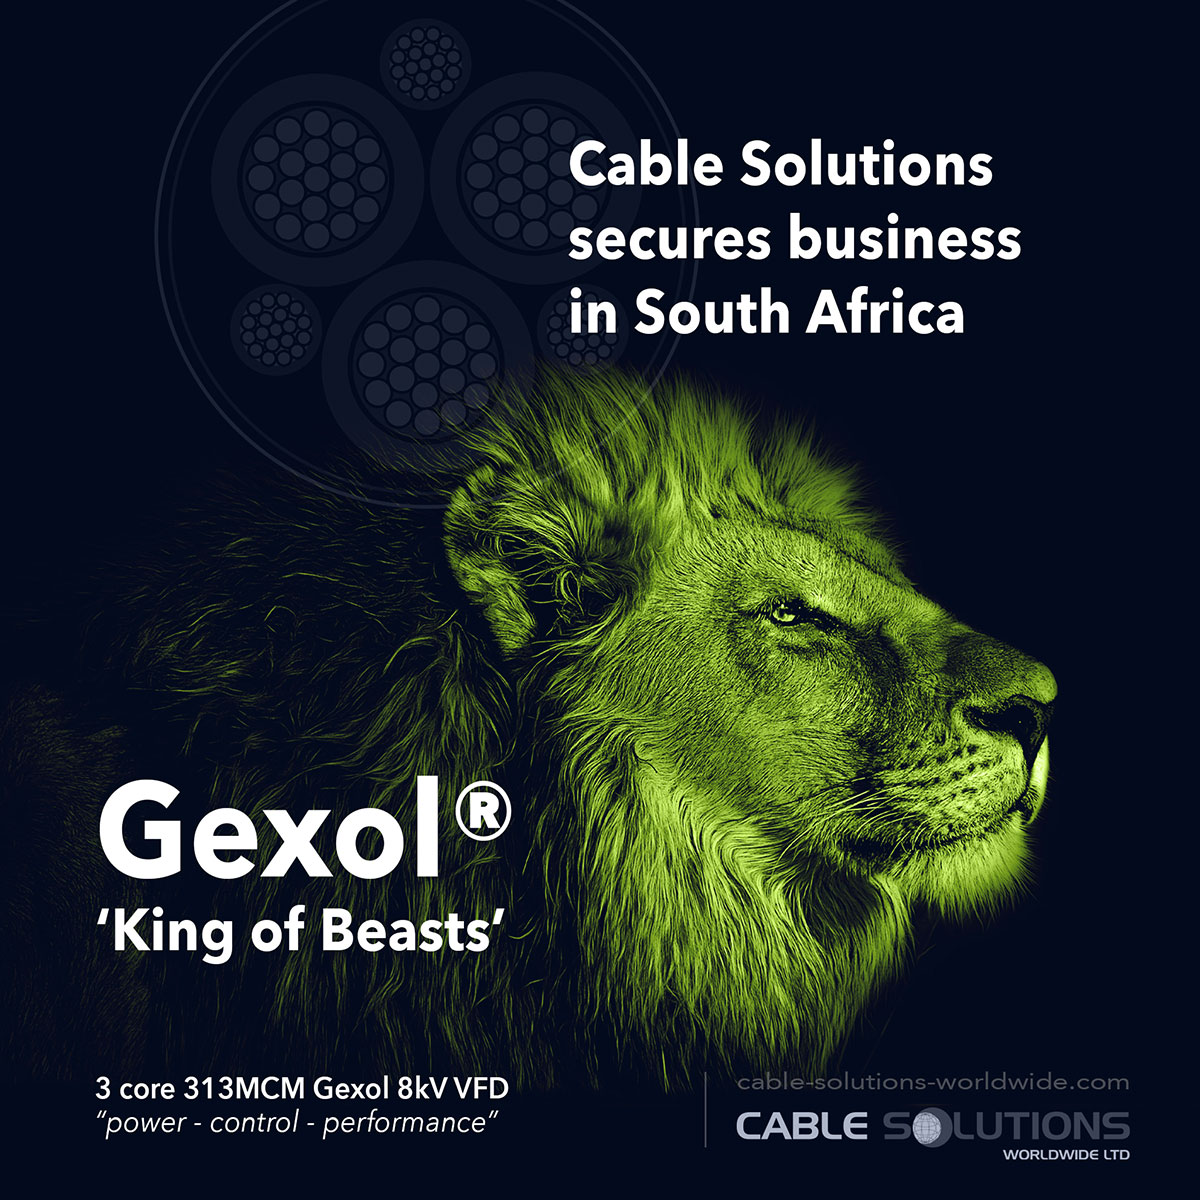 Gexol 8kv VFD cables